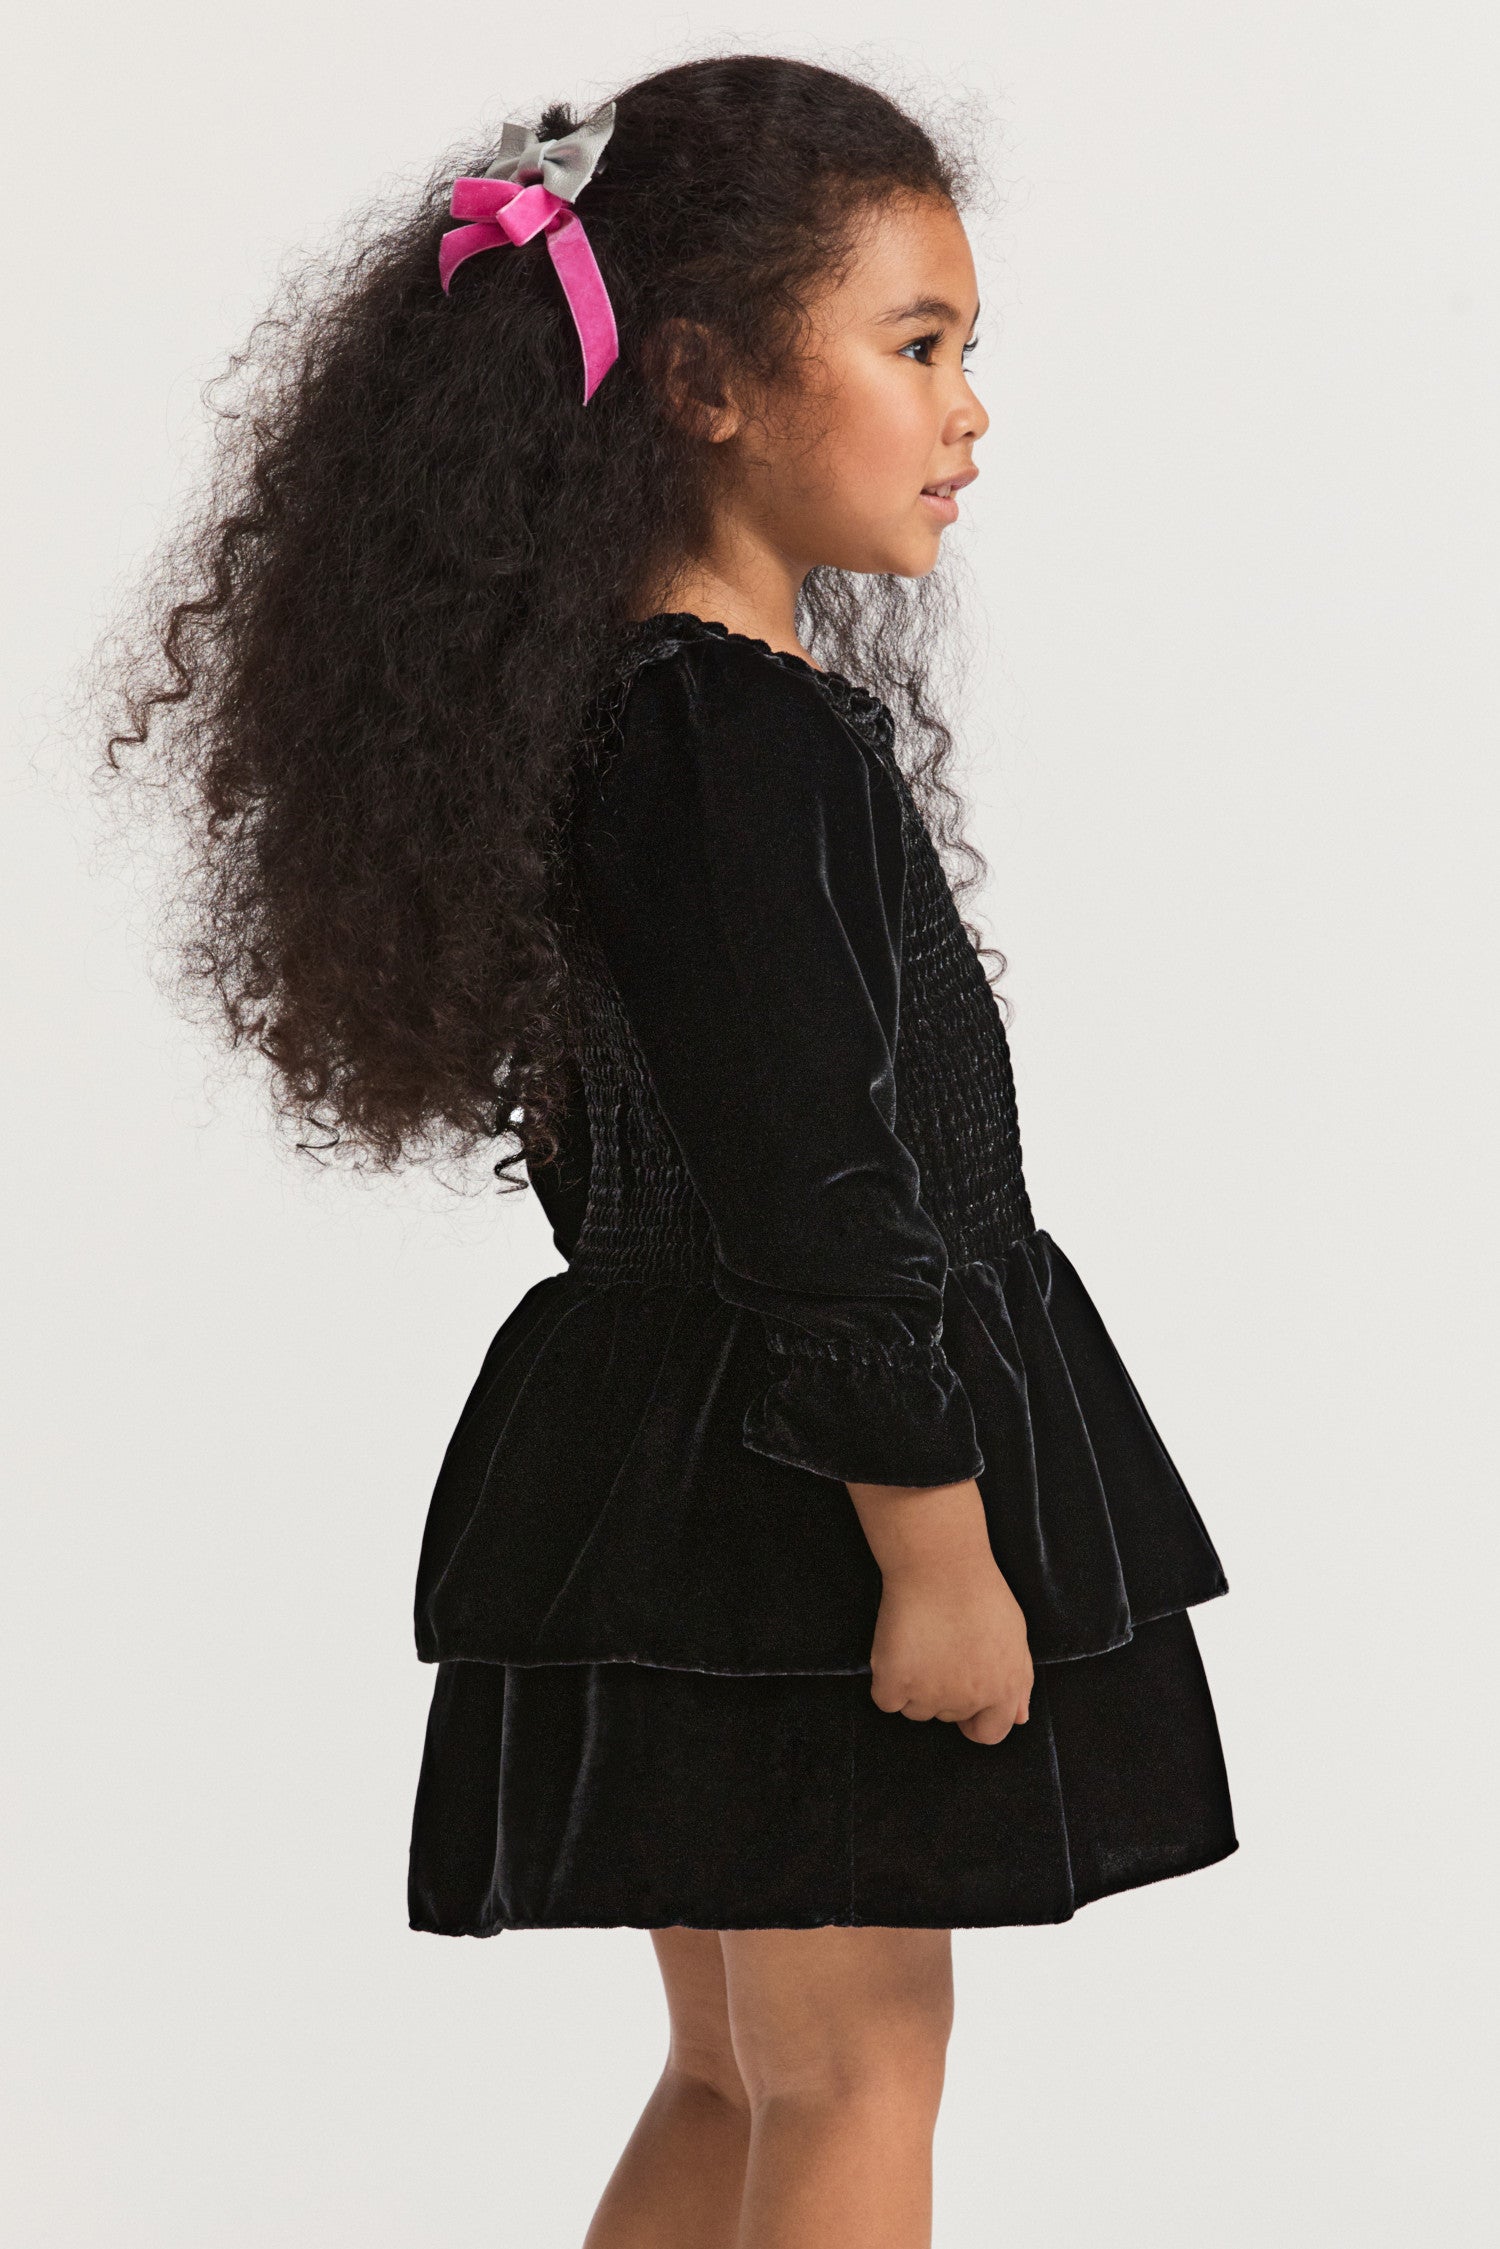 Girls mini black dress, long-sleeves with two layer ruffle skirt.